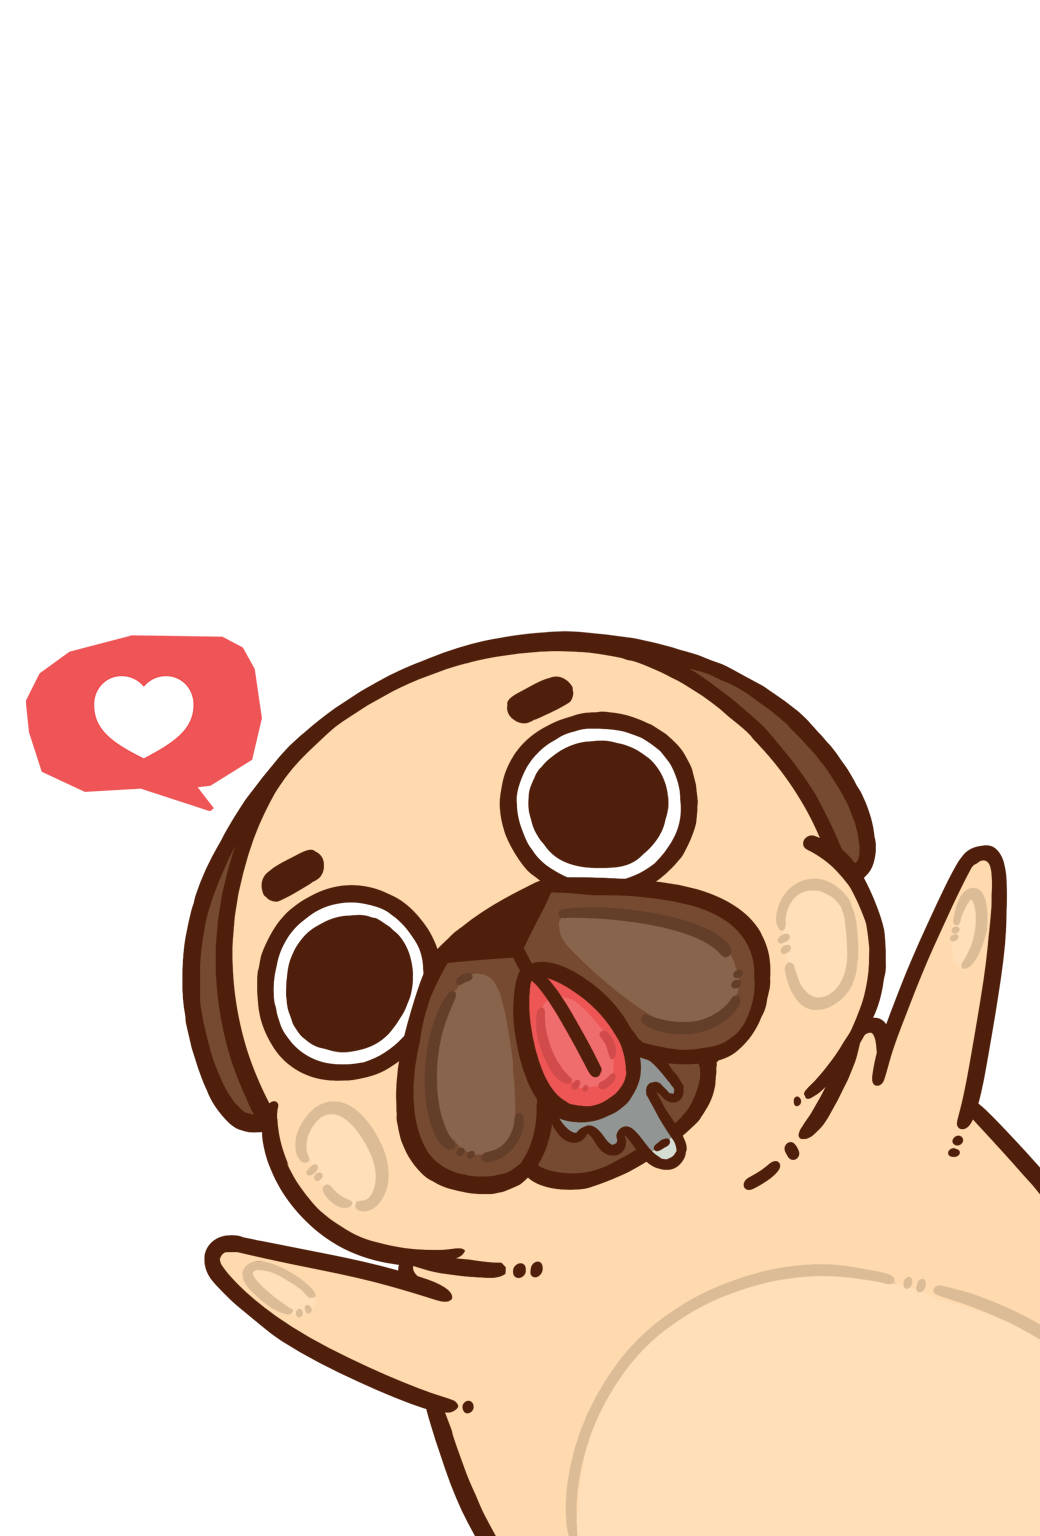 Cartoon Pug Dog With Heart Background